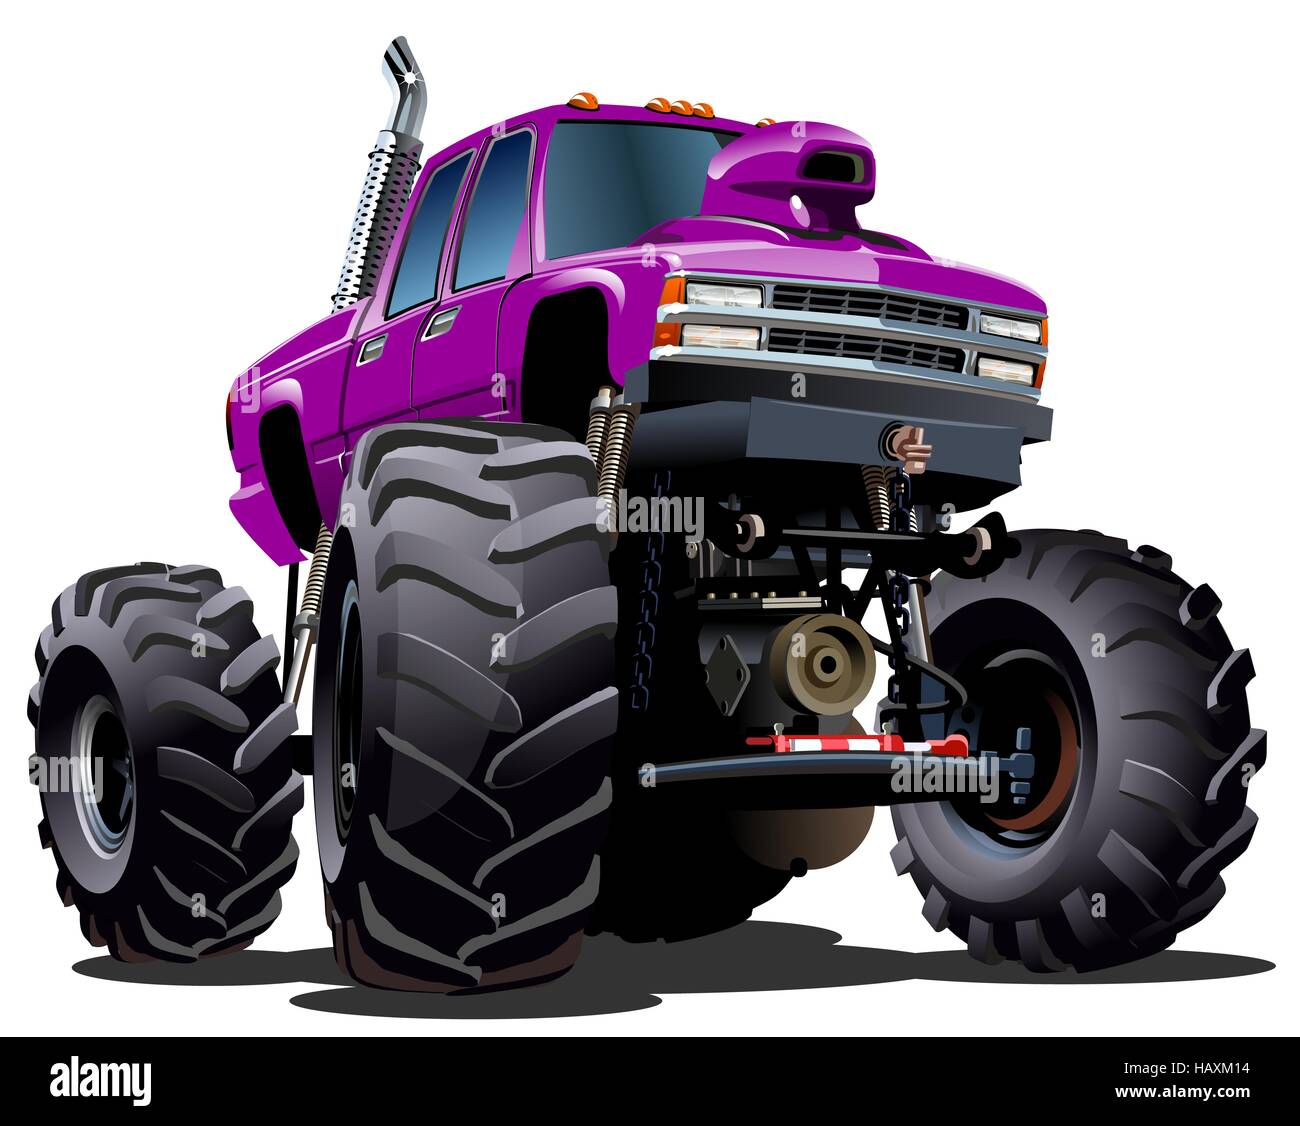 Cartoon Monster Truck Stock Photo